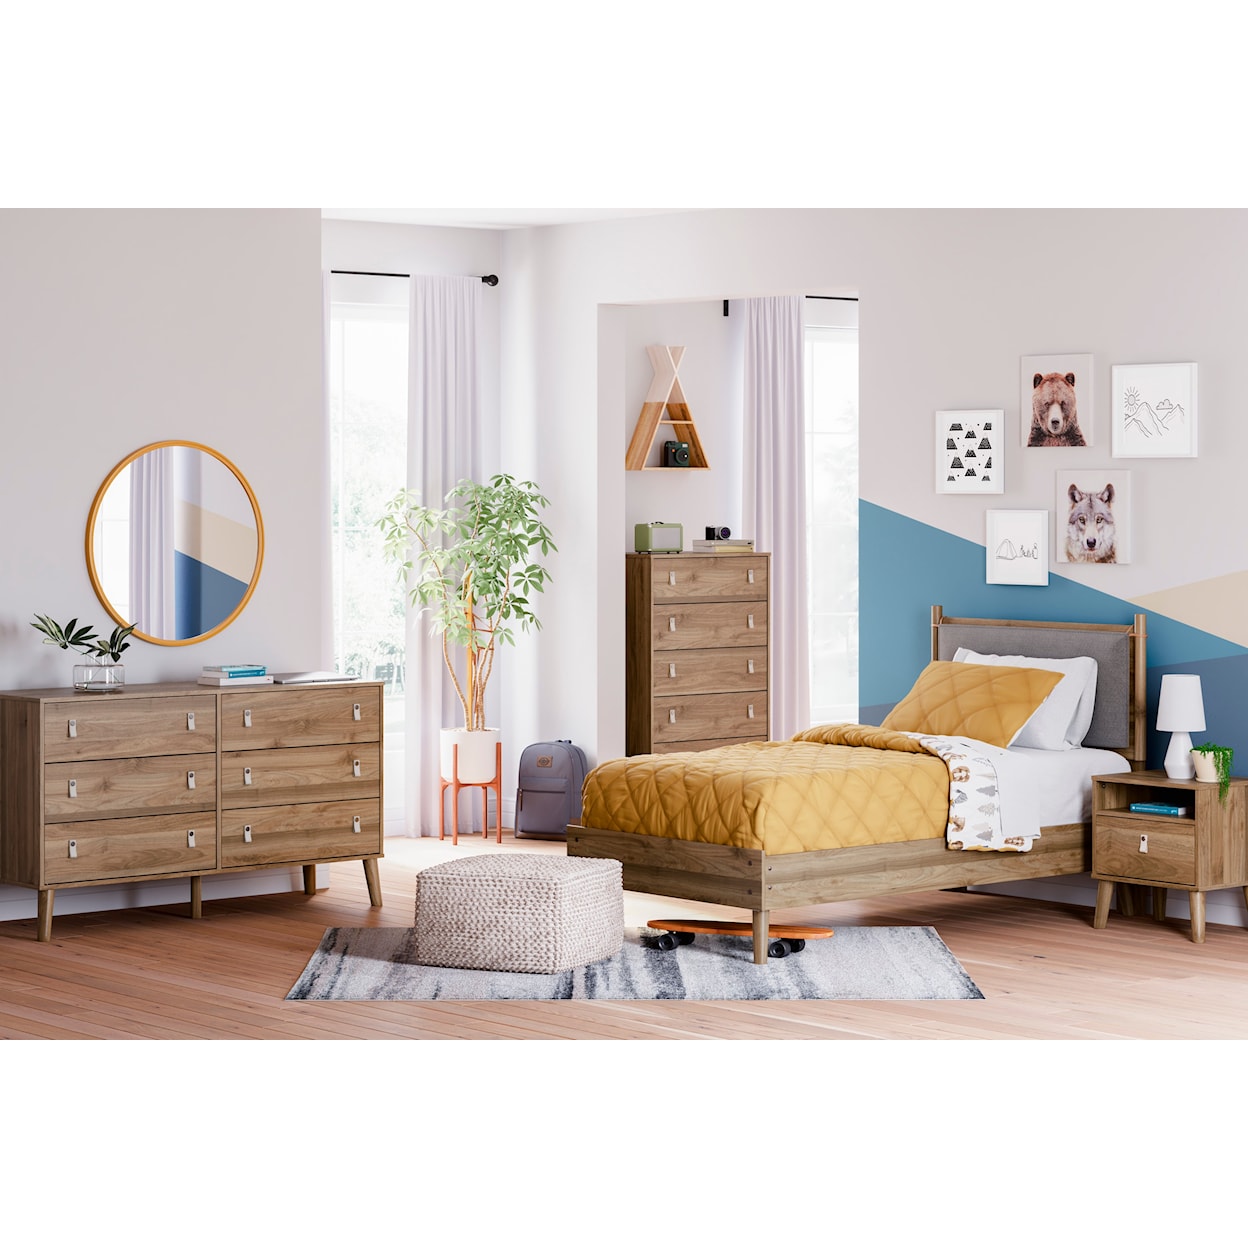 Ashley Furniture Signature Design Aprilyn Twin Bedroom Set